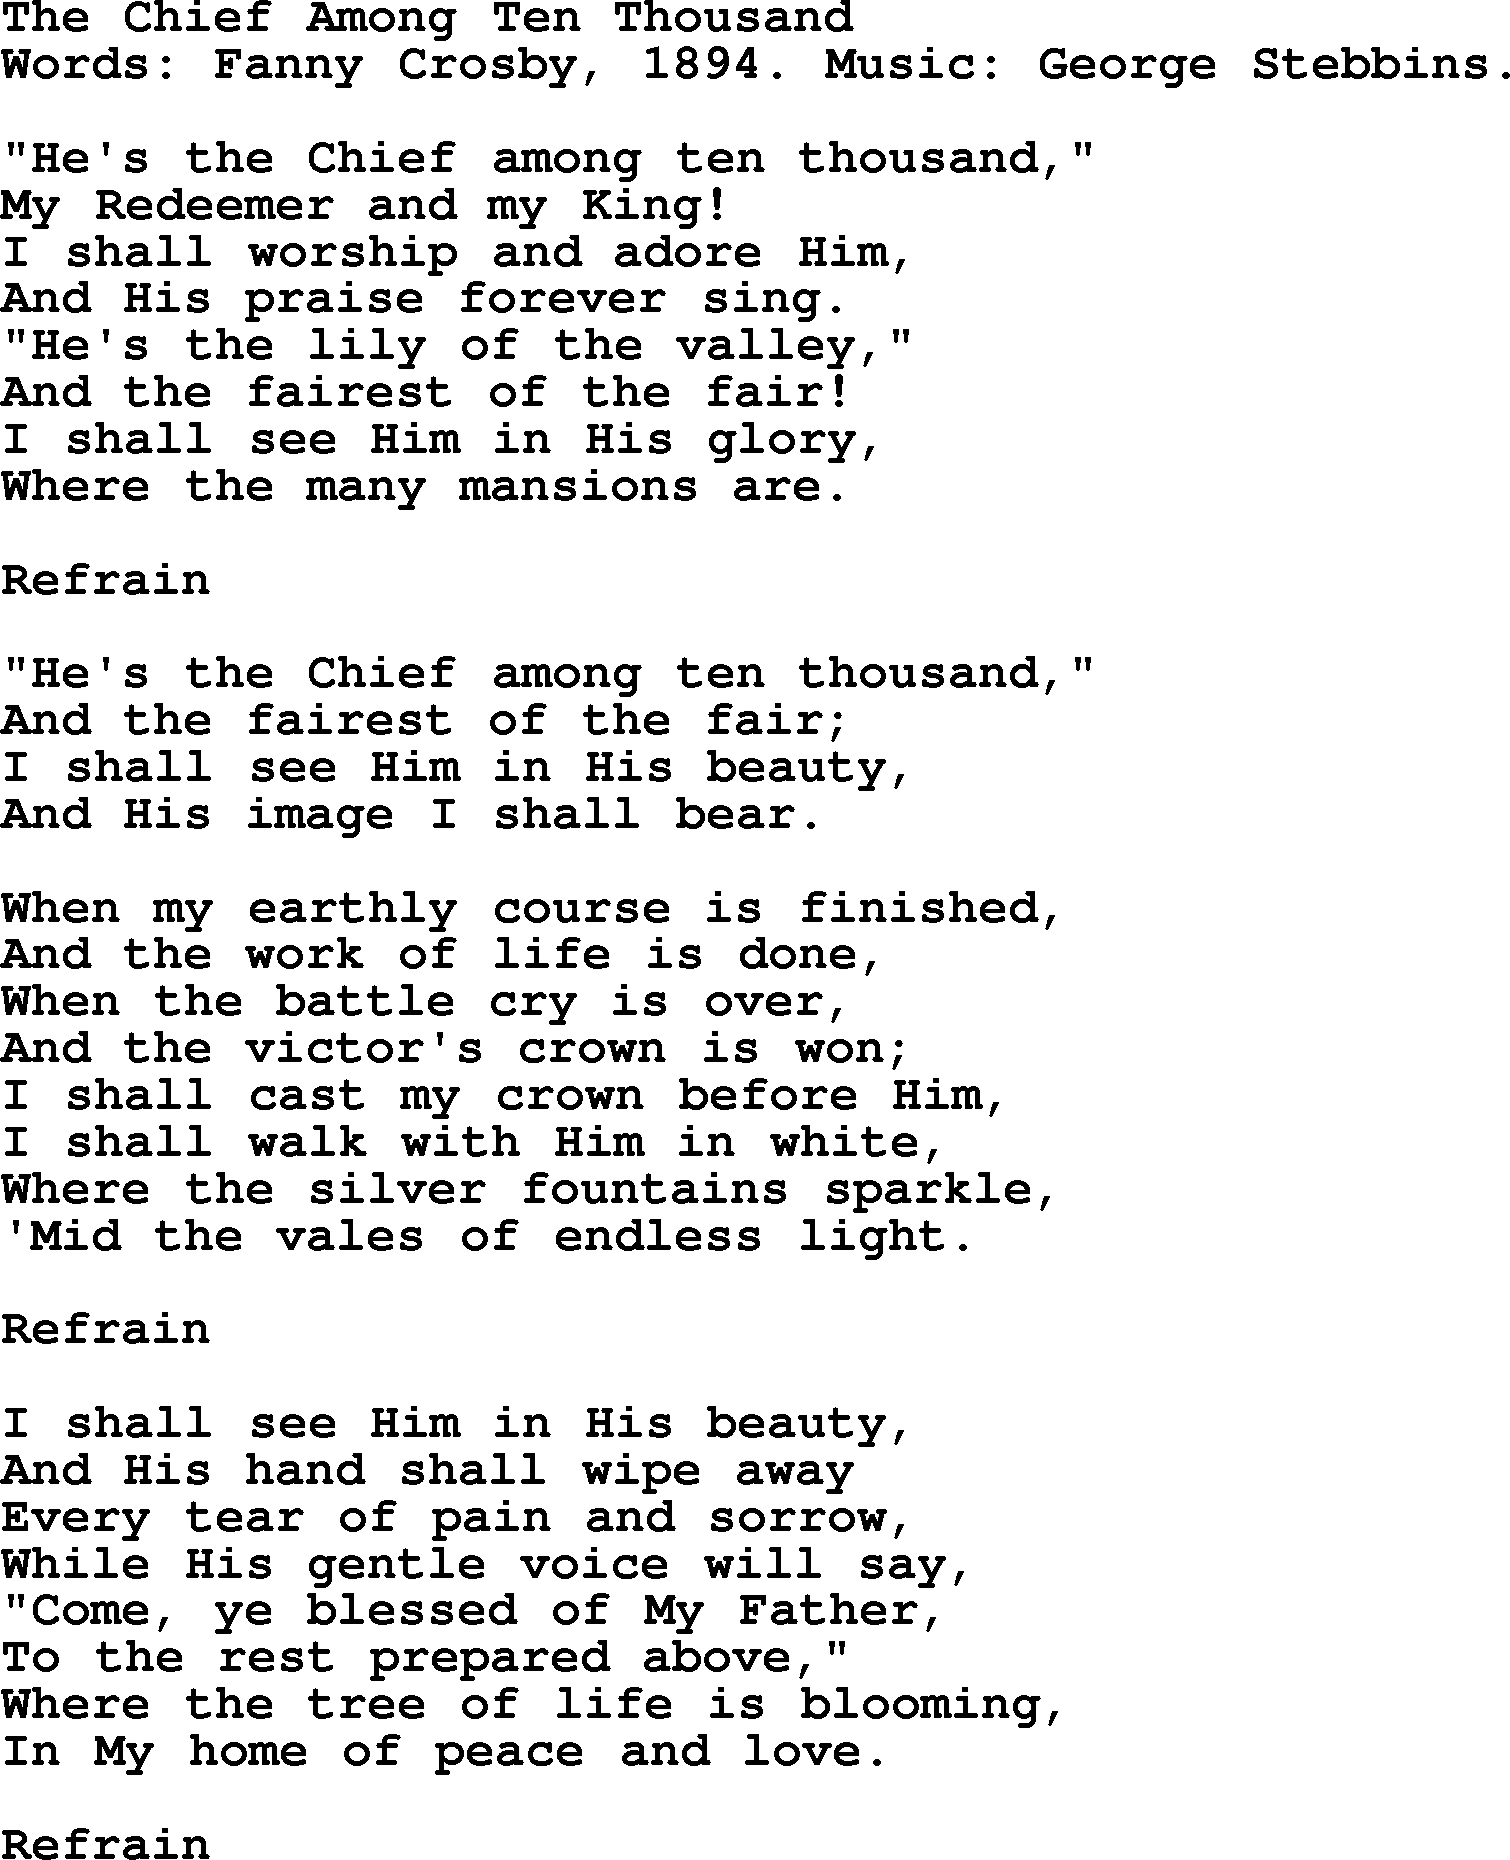 Fanny Crosby song: The Chief Among Ten Thousand, lyrics